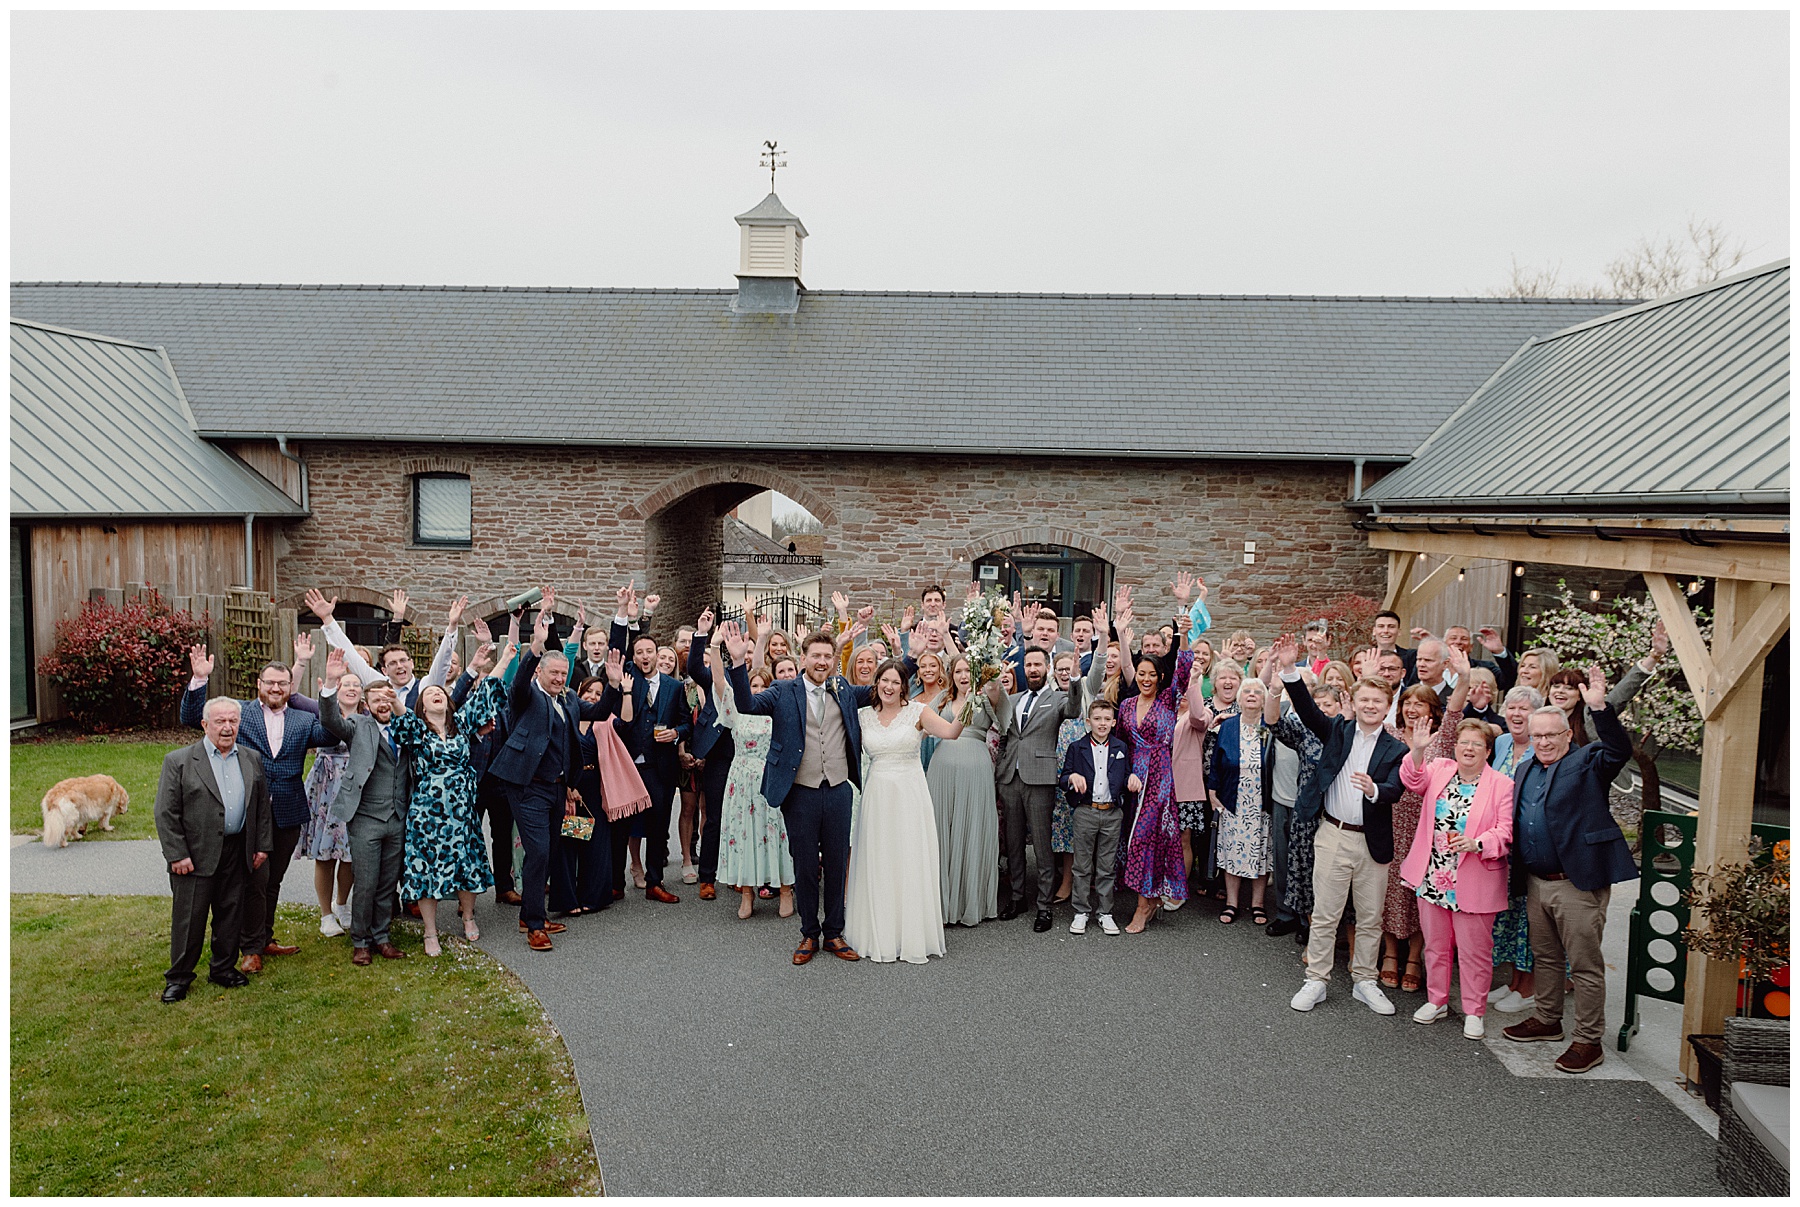 Wedding Guests at Courtyard Wales